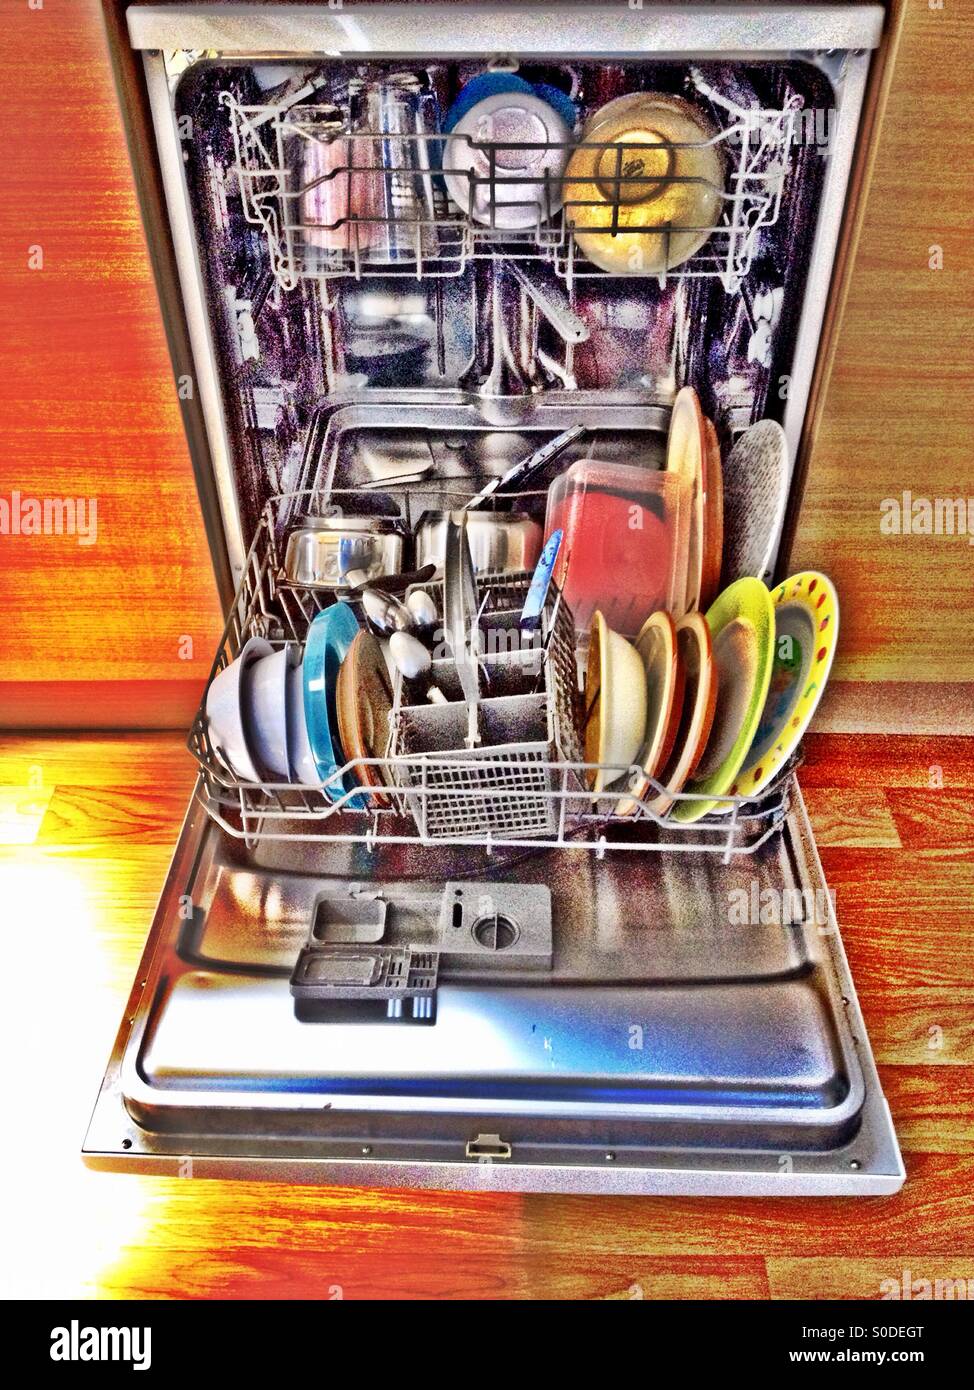 A loaded dishwasher. Stock Photo